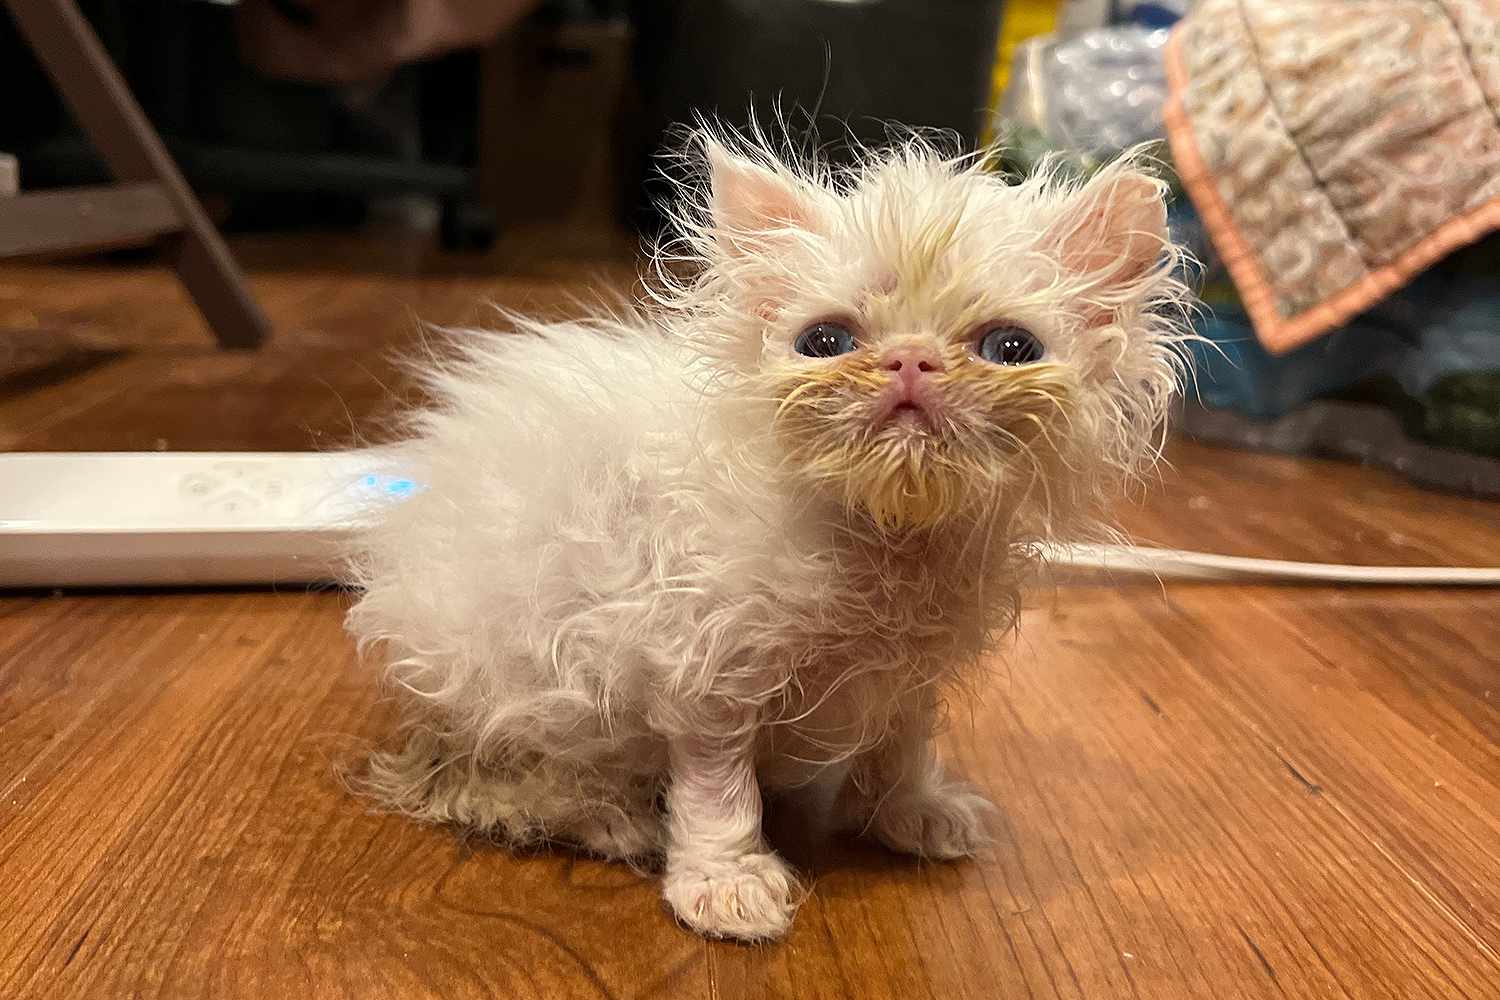 Meet Wisp: The adorable Persian kitten that stole TikTok’s heart